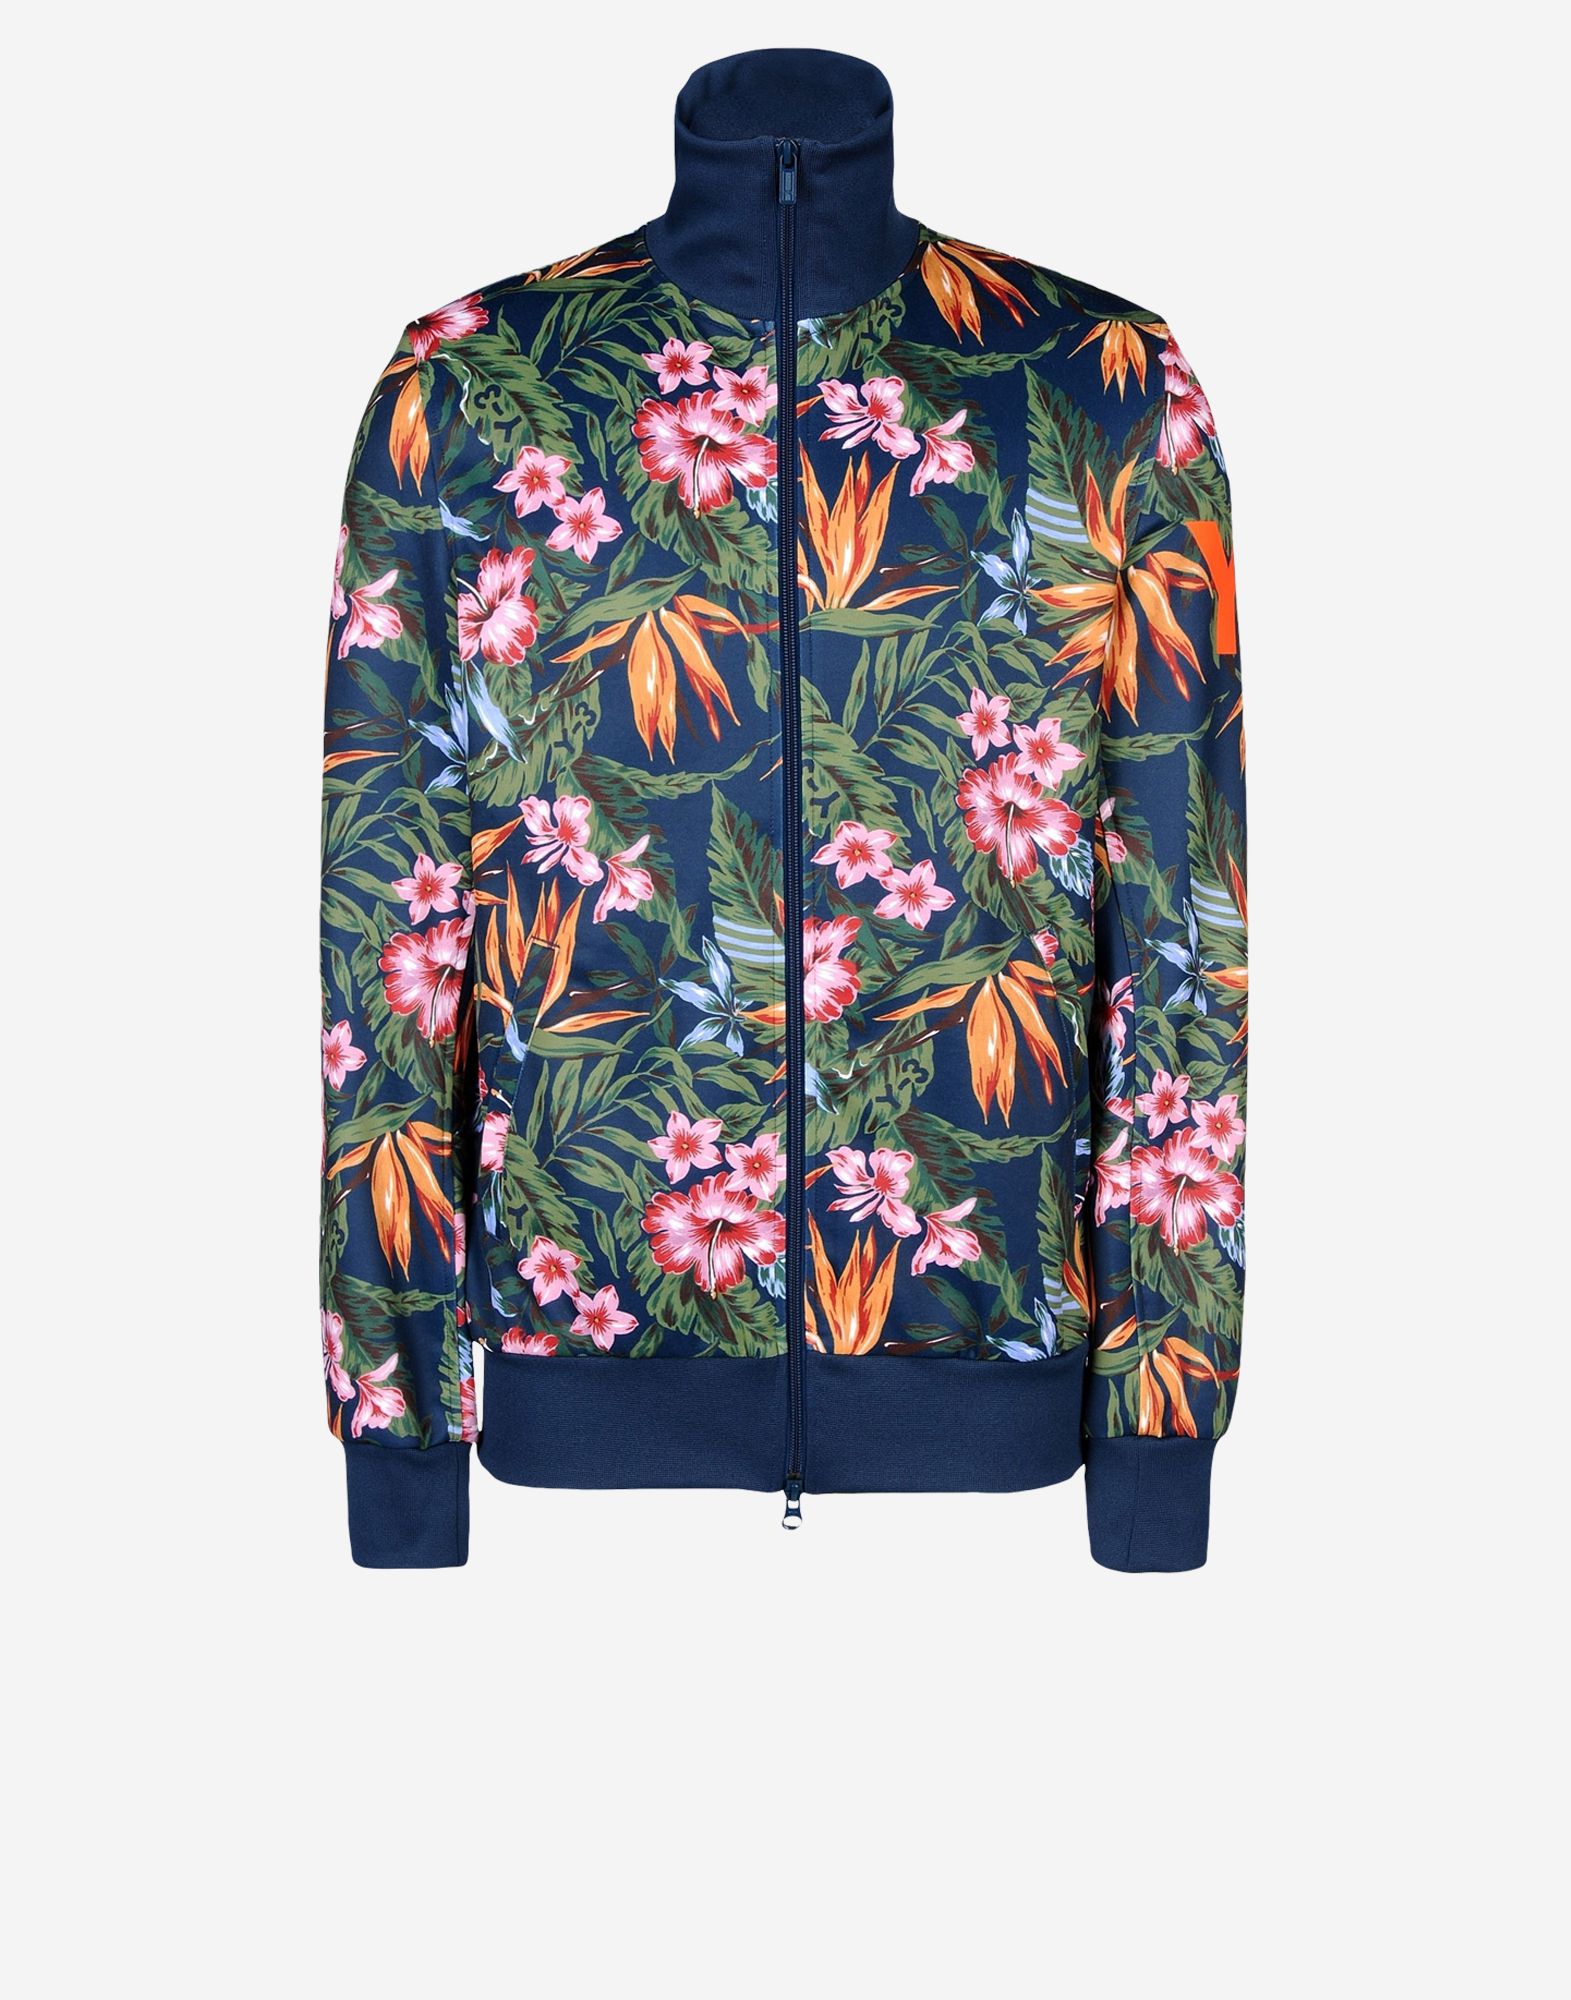 adidas flower jacket mens